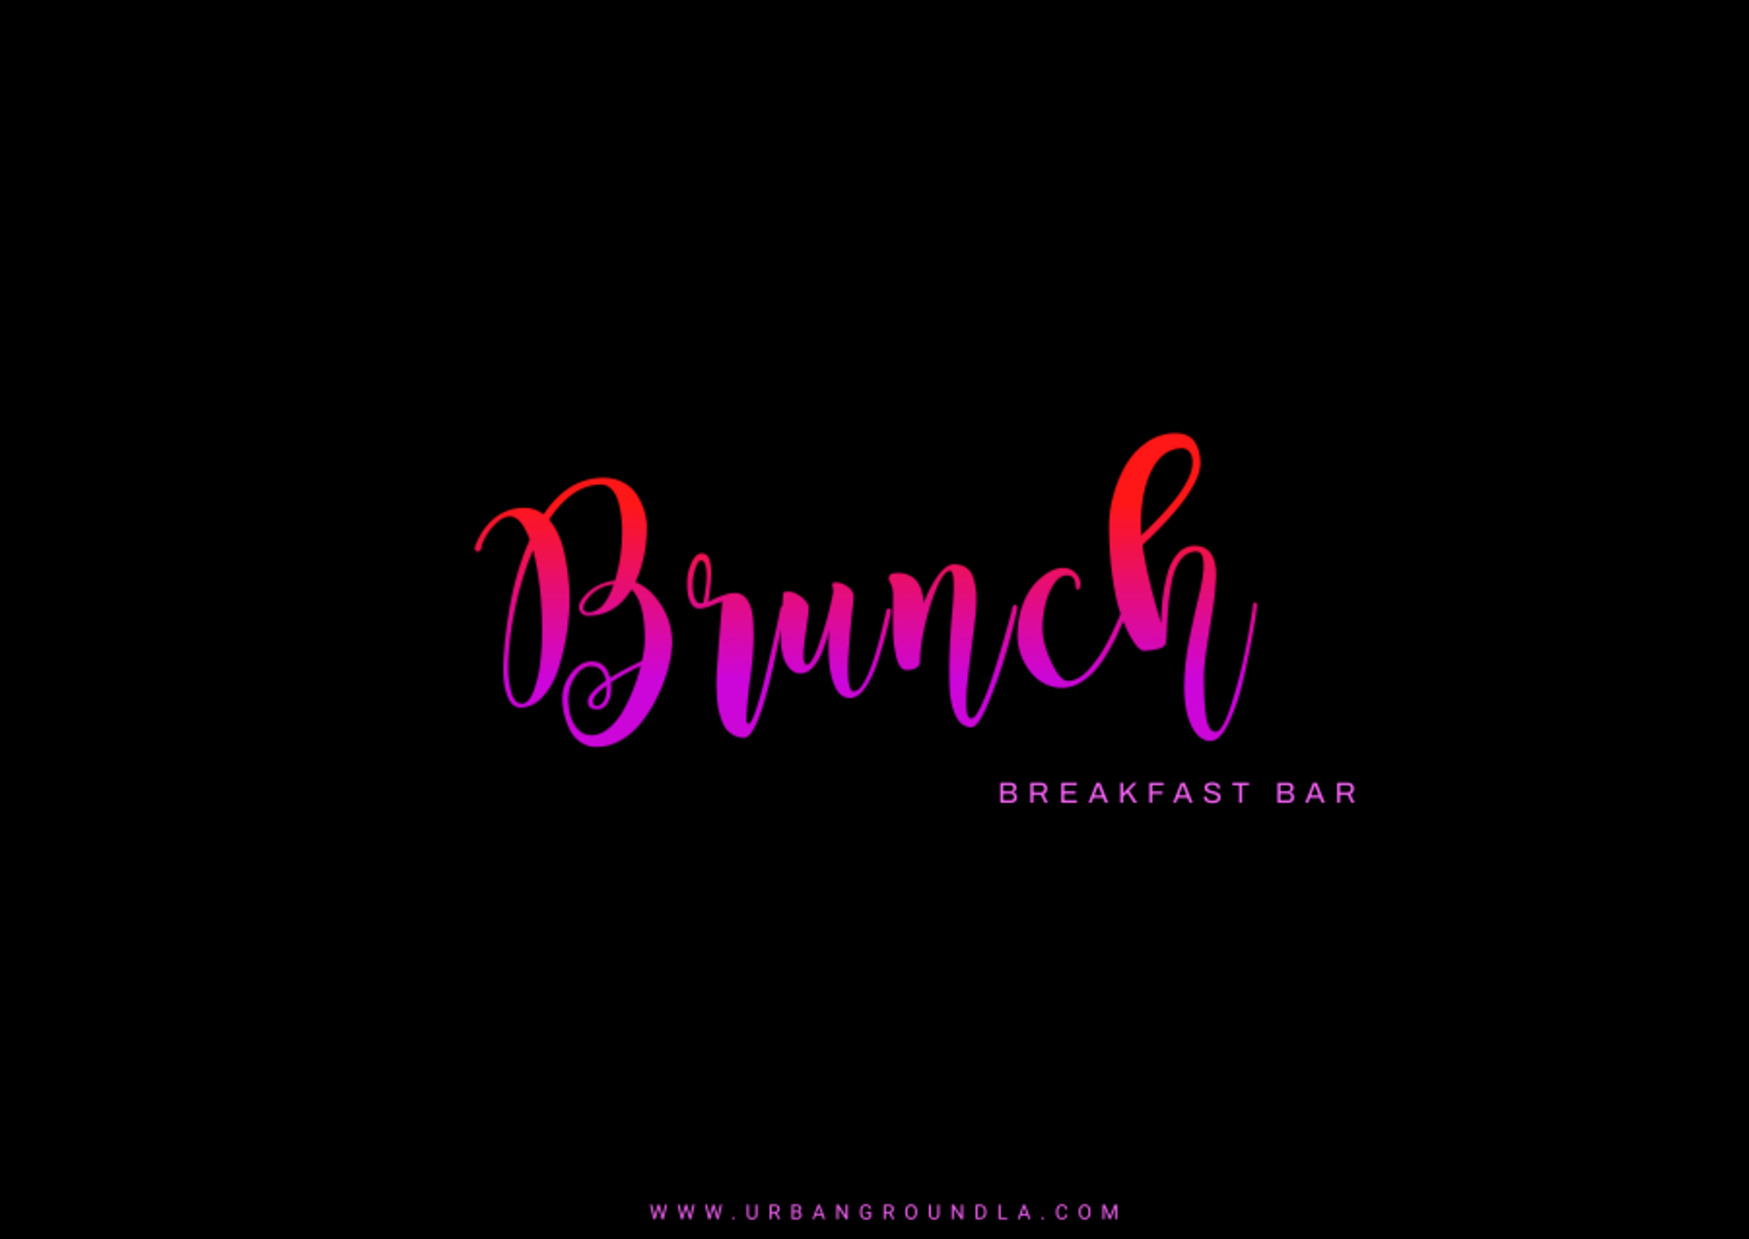 The Brunch Breakfast Bar Urban Ground Resort & Residence